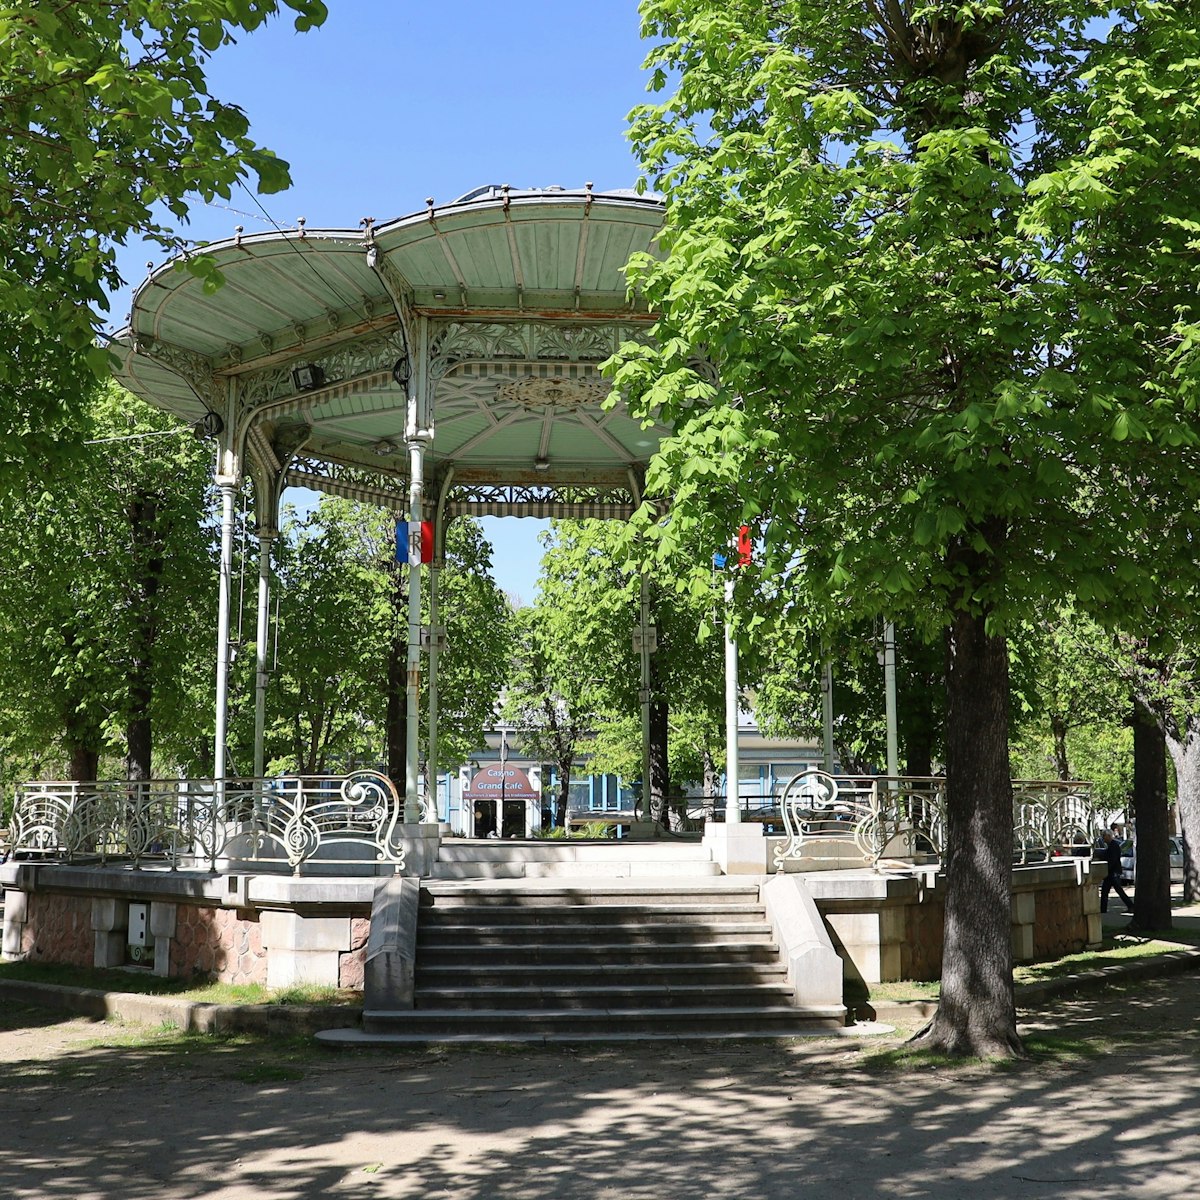 Gazebo in the Parc des Sources, Vichy, France.